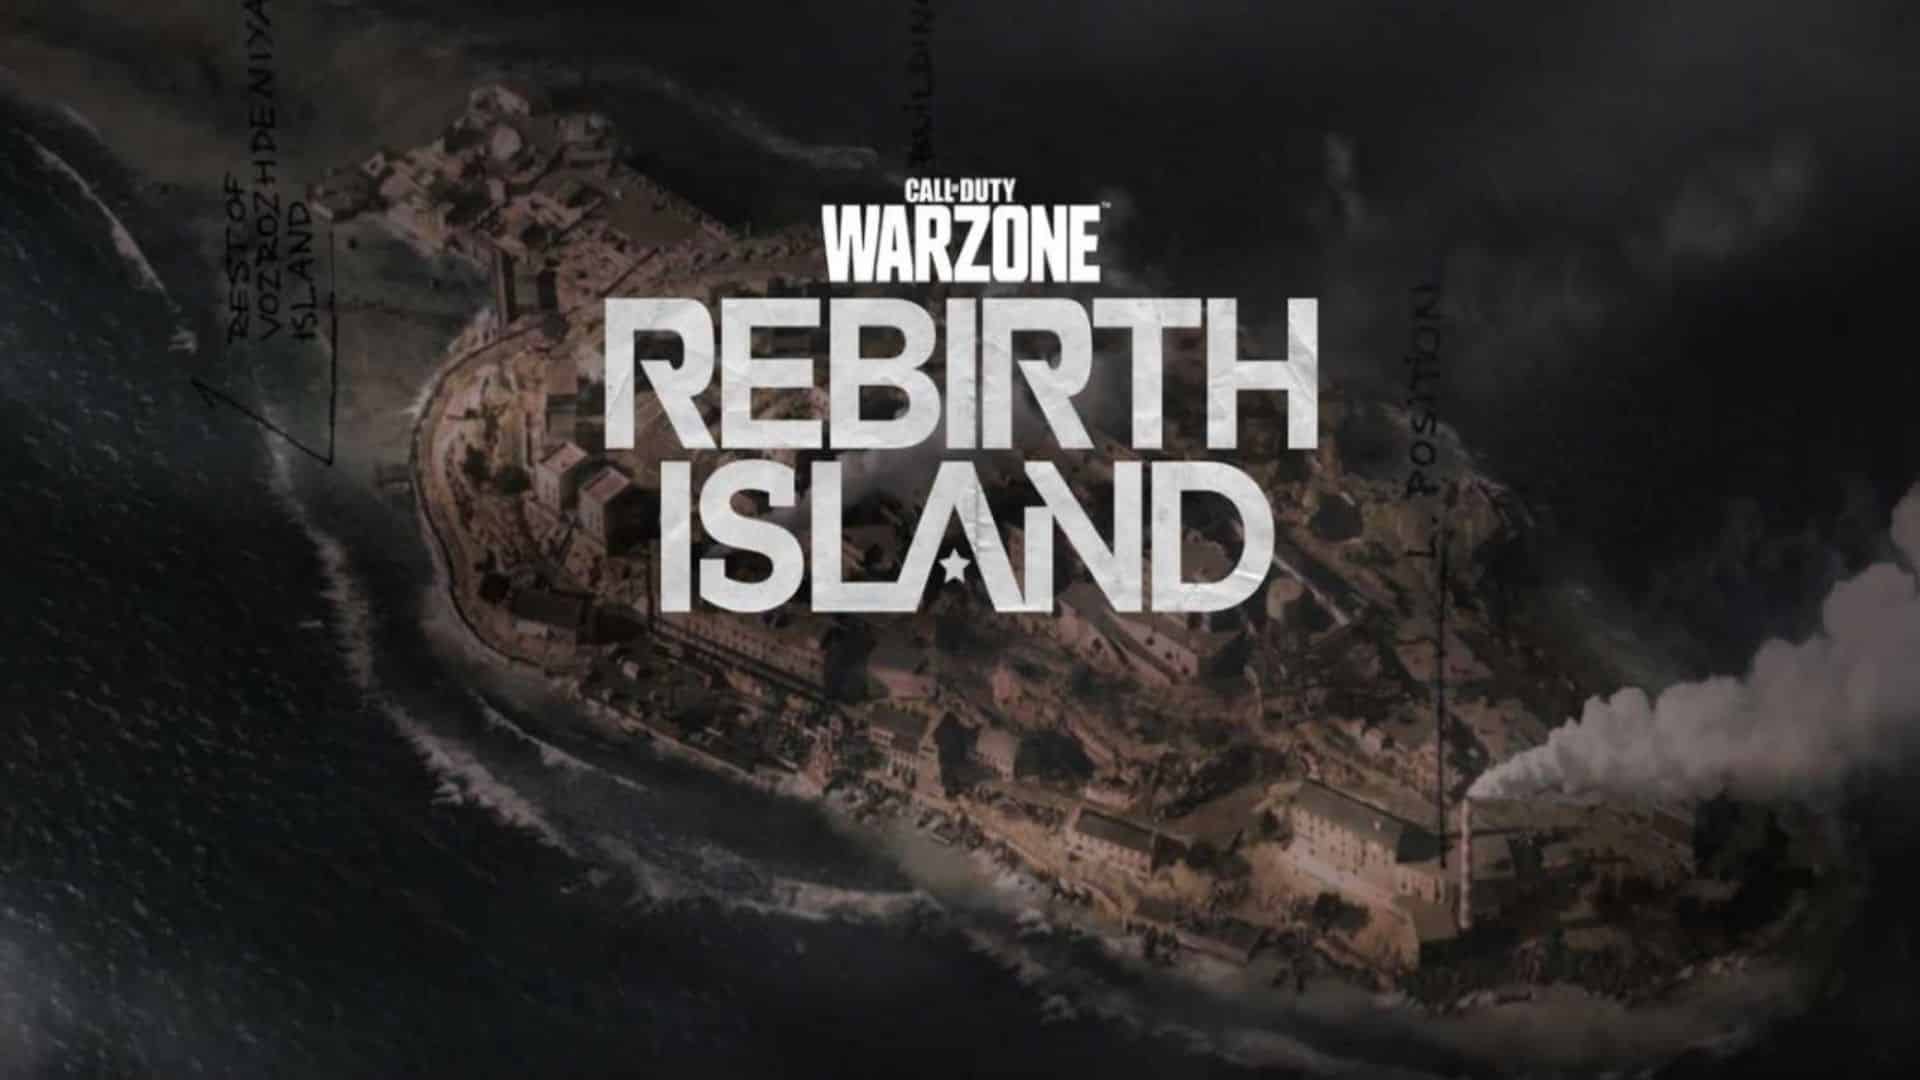 Call of Duty Warzone Rebirth Island